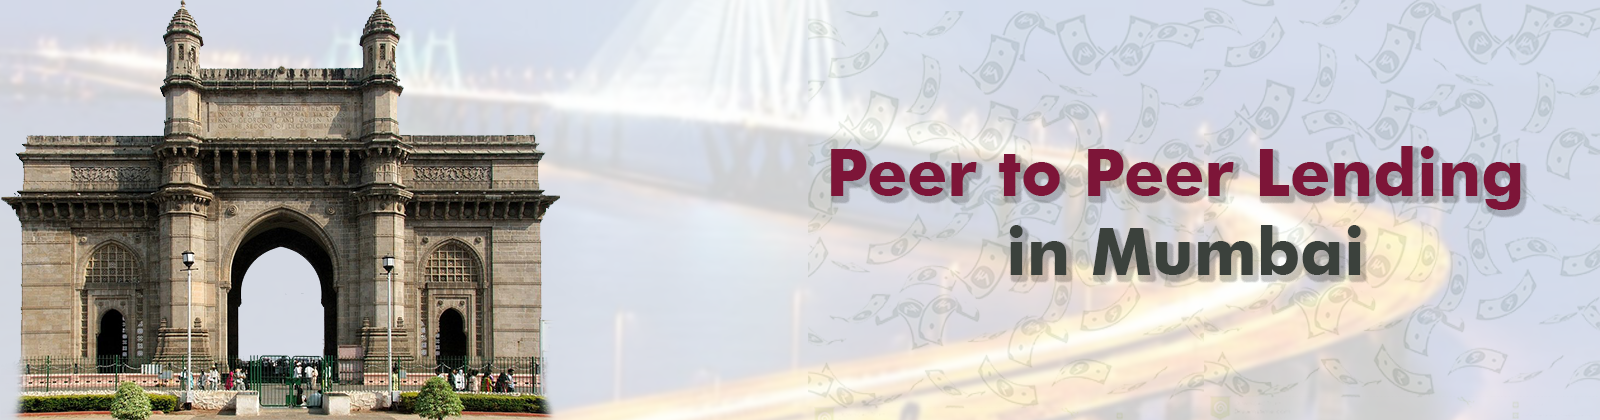 Peer to Peer Lending in Mumbai